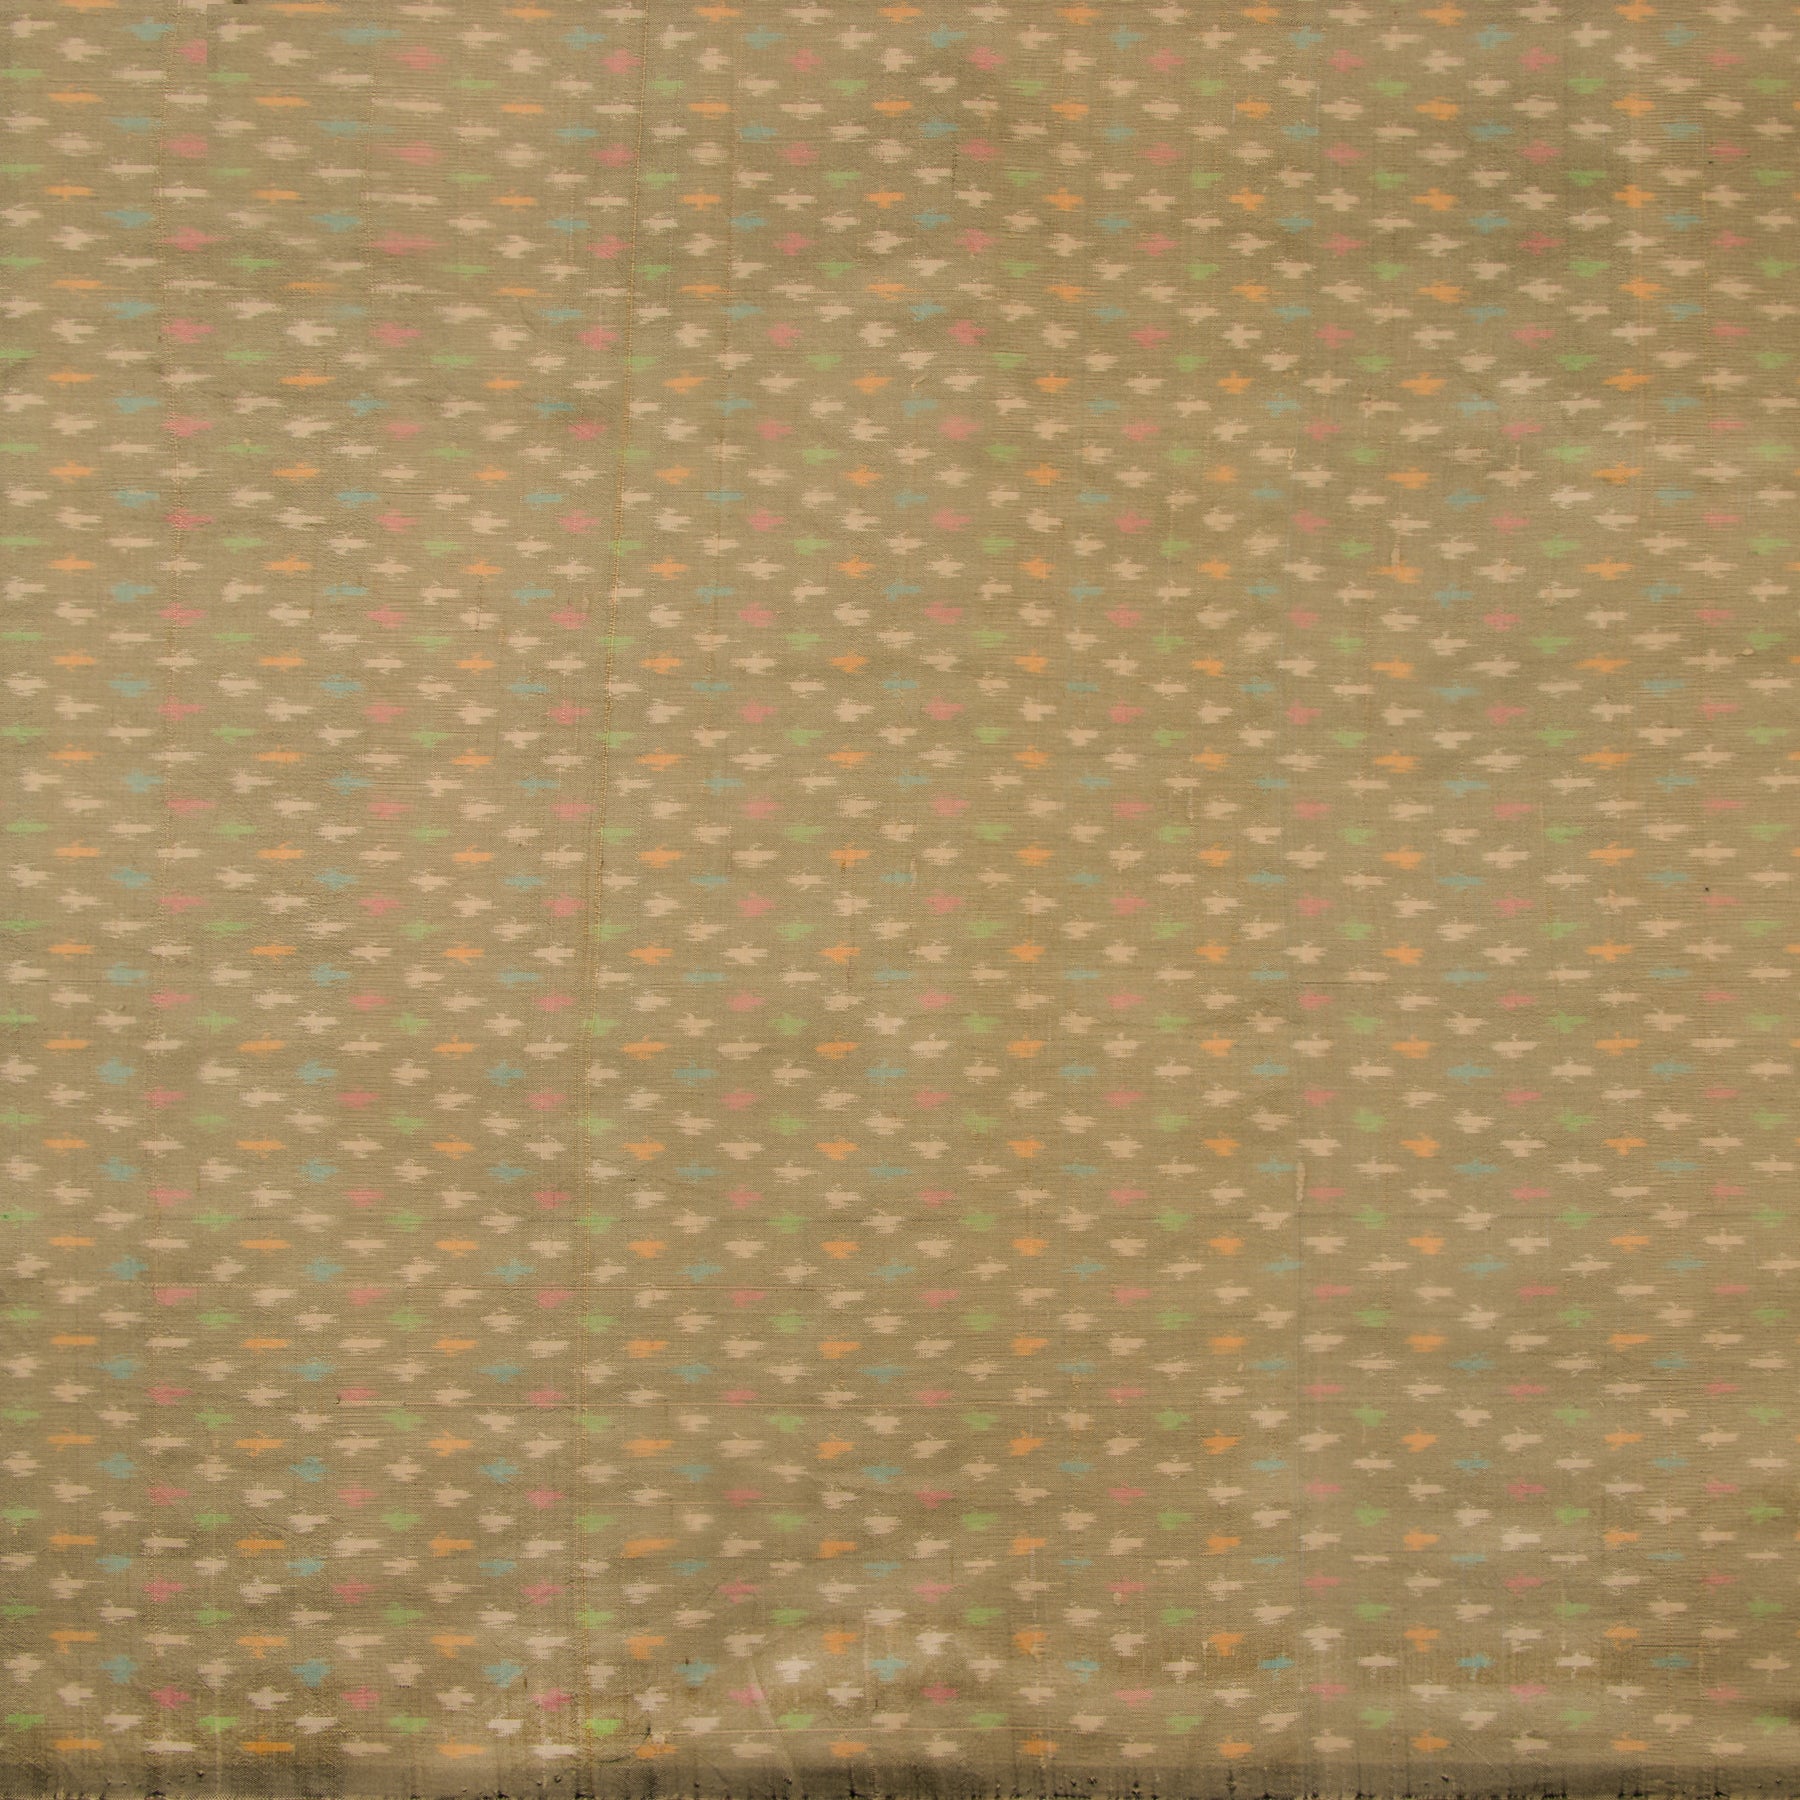 Kanakavalli Ikat Raw Silk Blouse Length 22-140-HB002-14159 - Full View